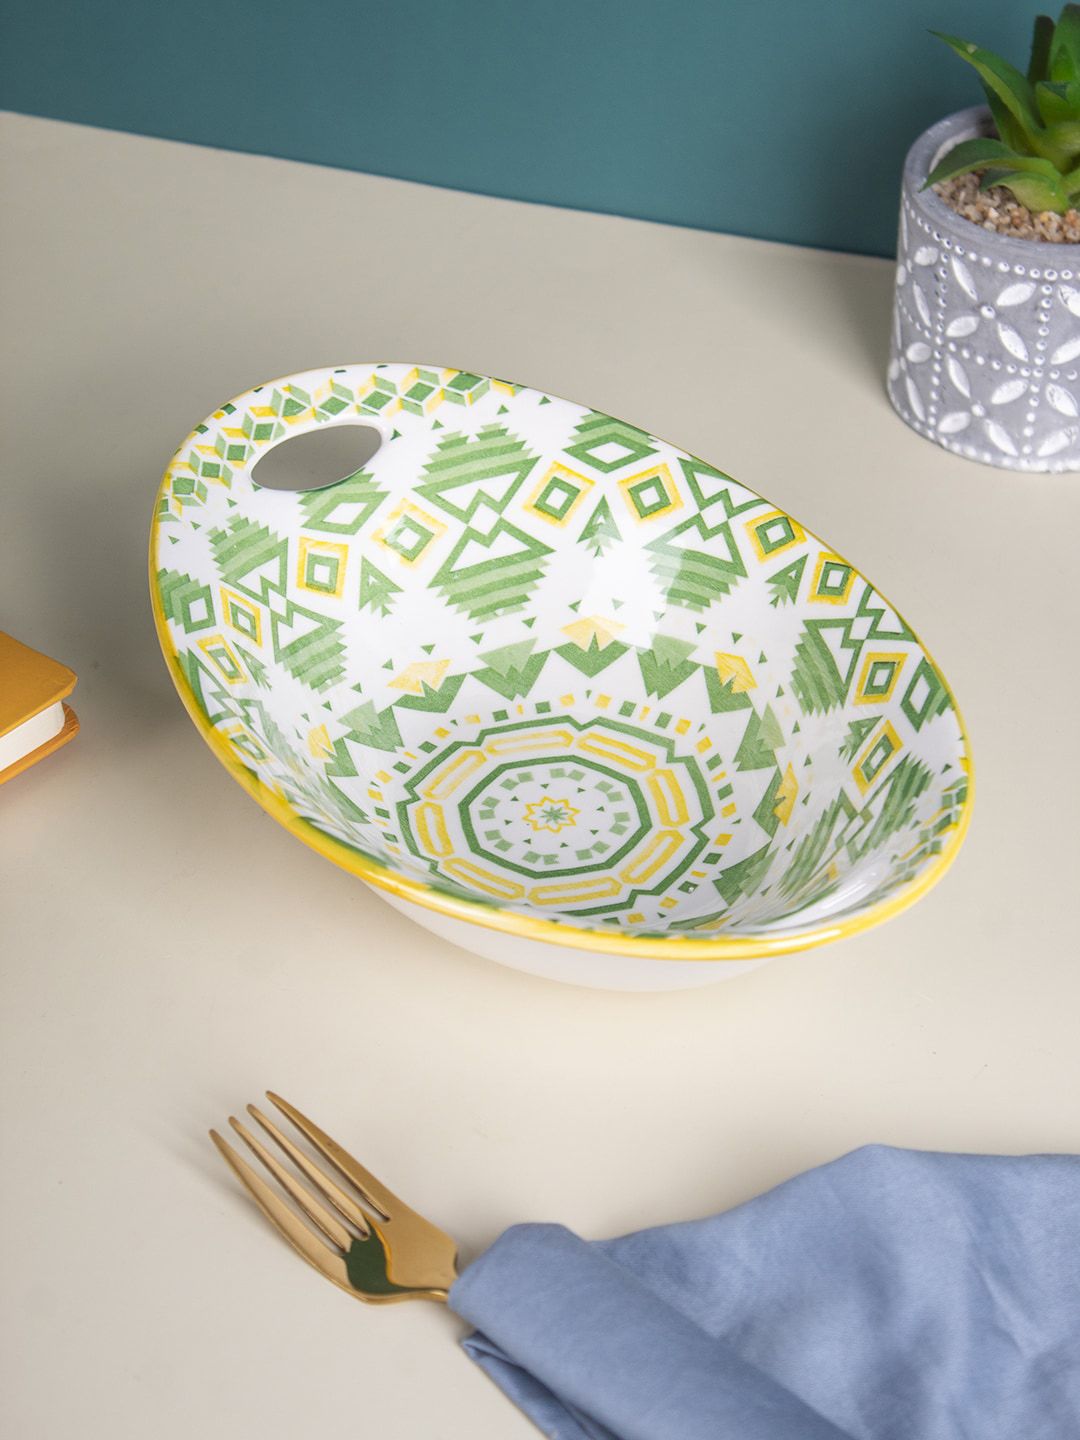 MARKET99 Yellow & Green Printed Ceramic Platter Price in India